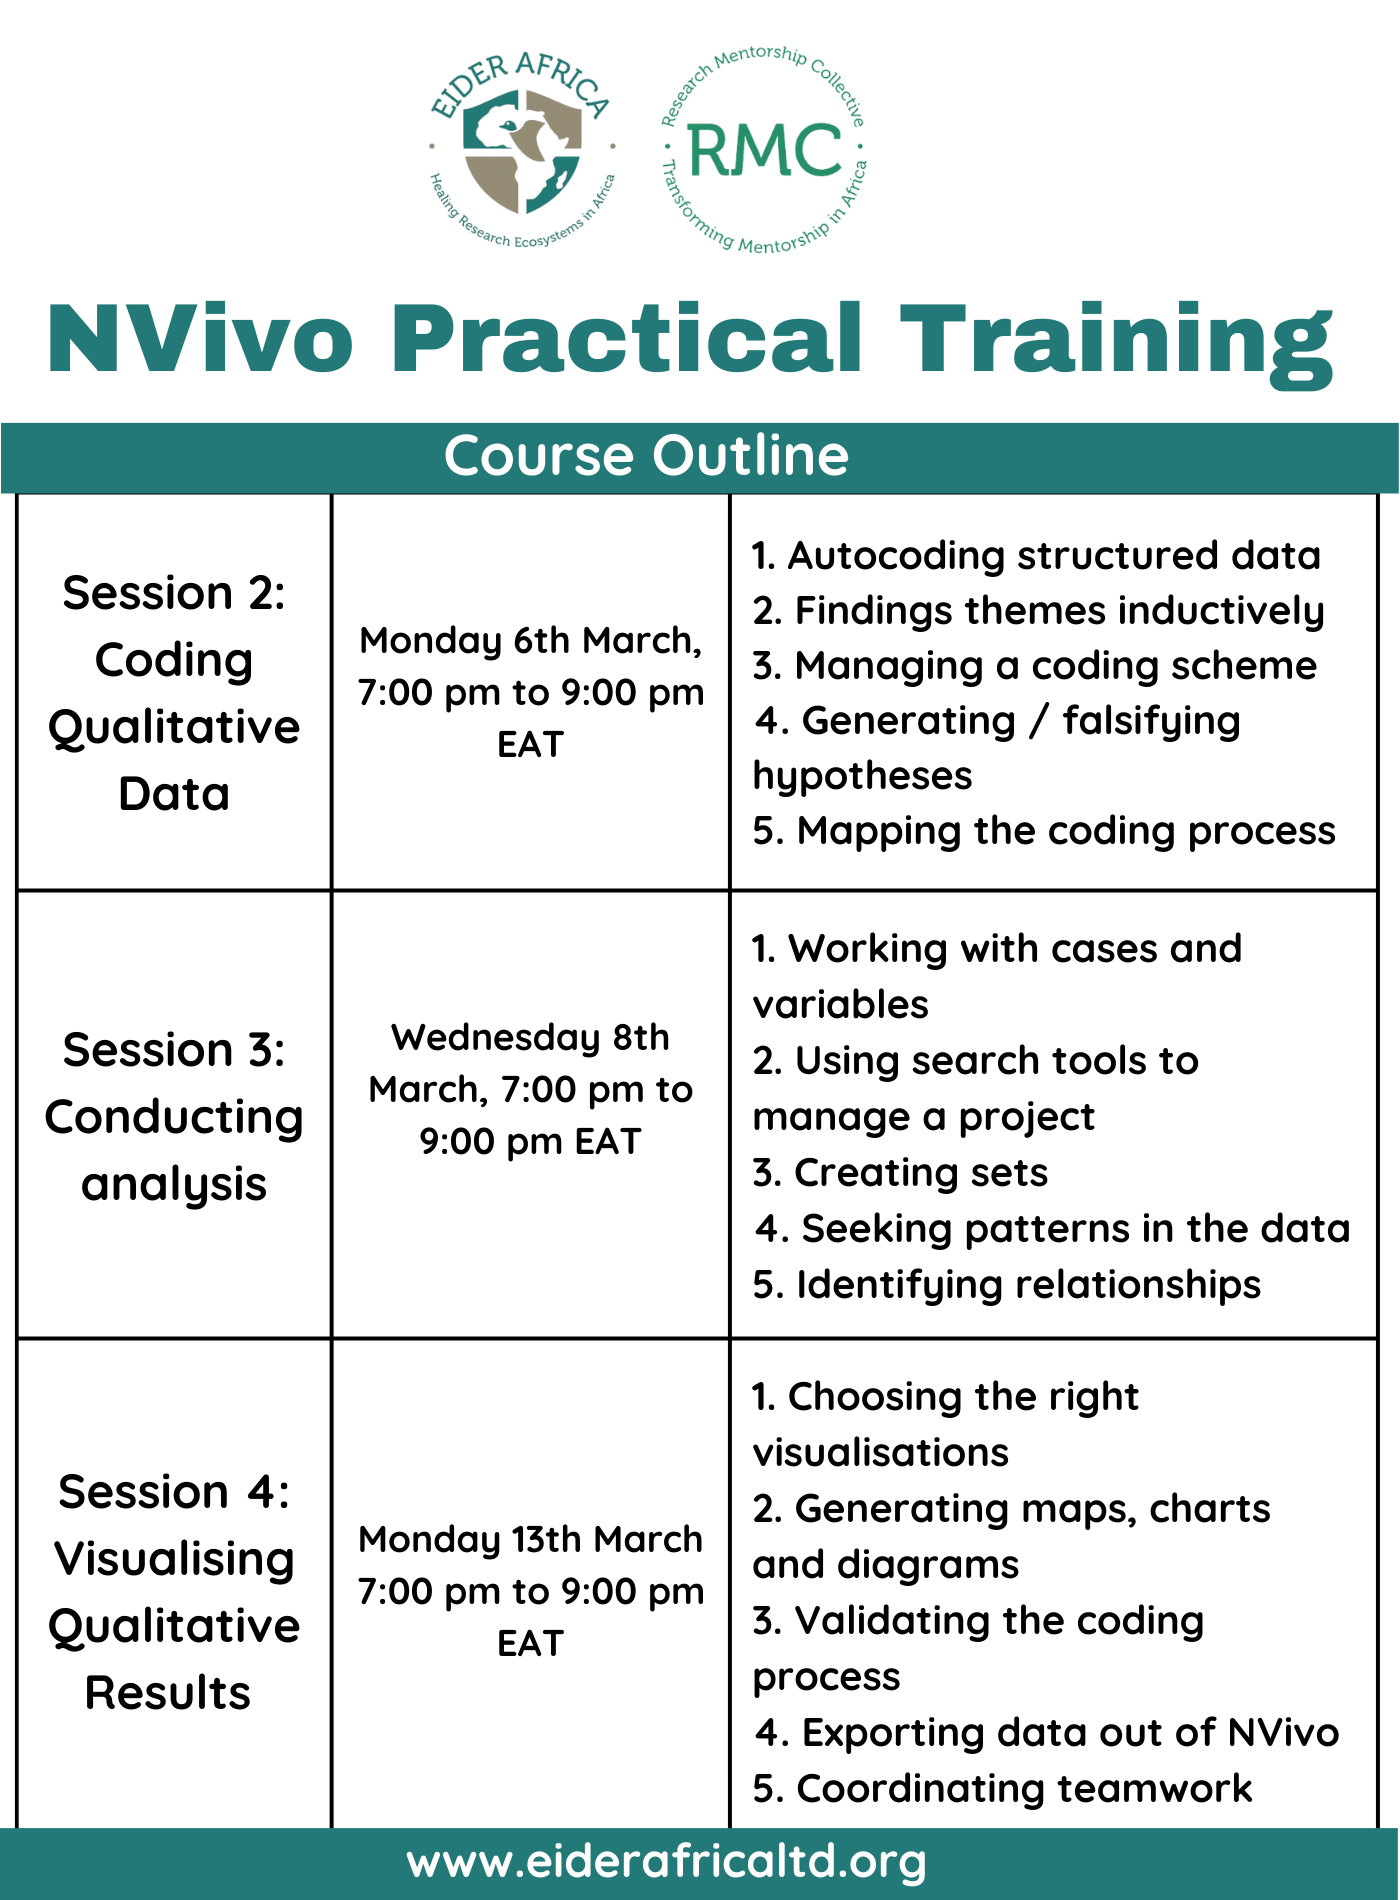 NVivo training course outline